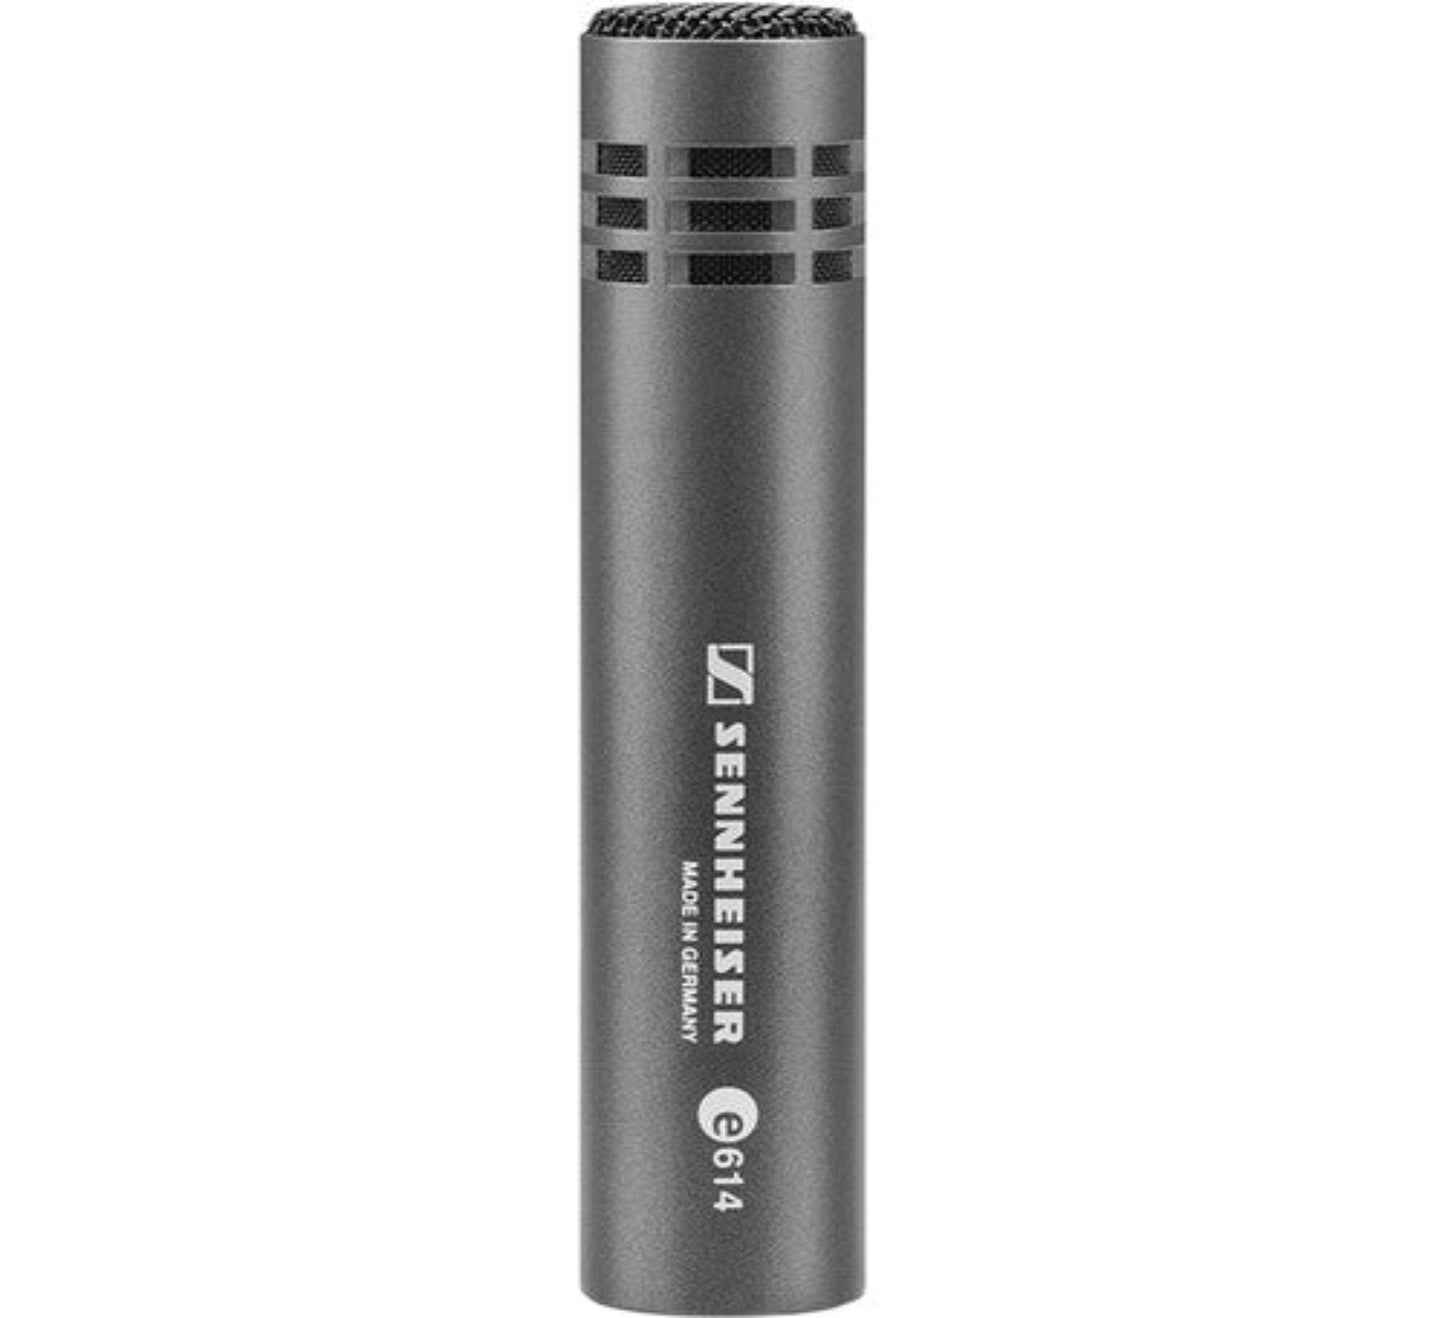 SENNHEISER e600 Drum Microphone Kit